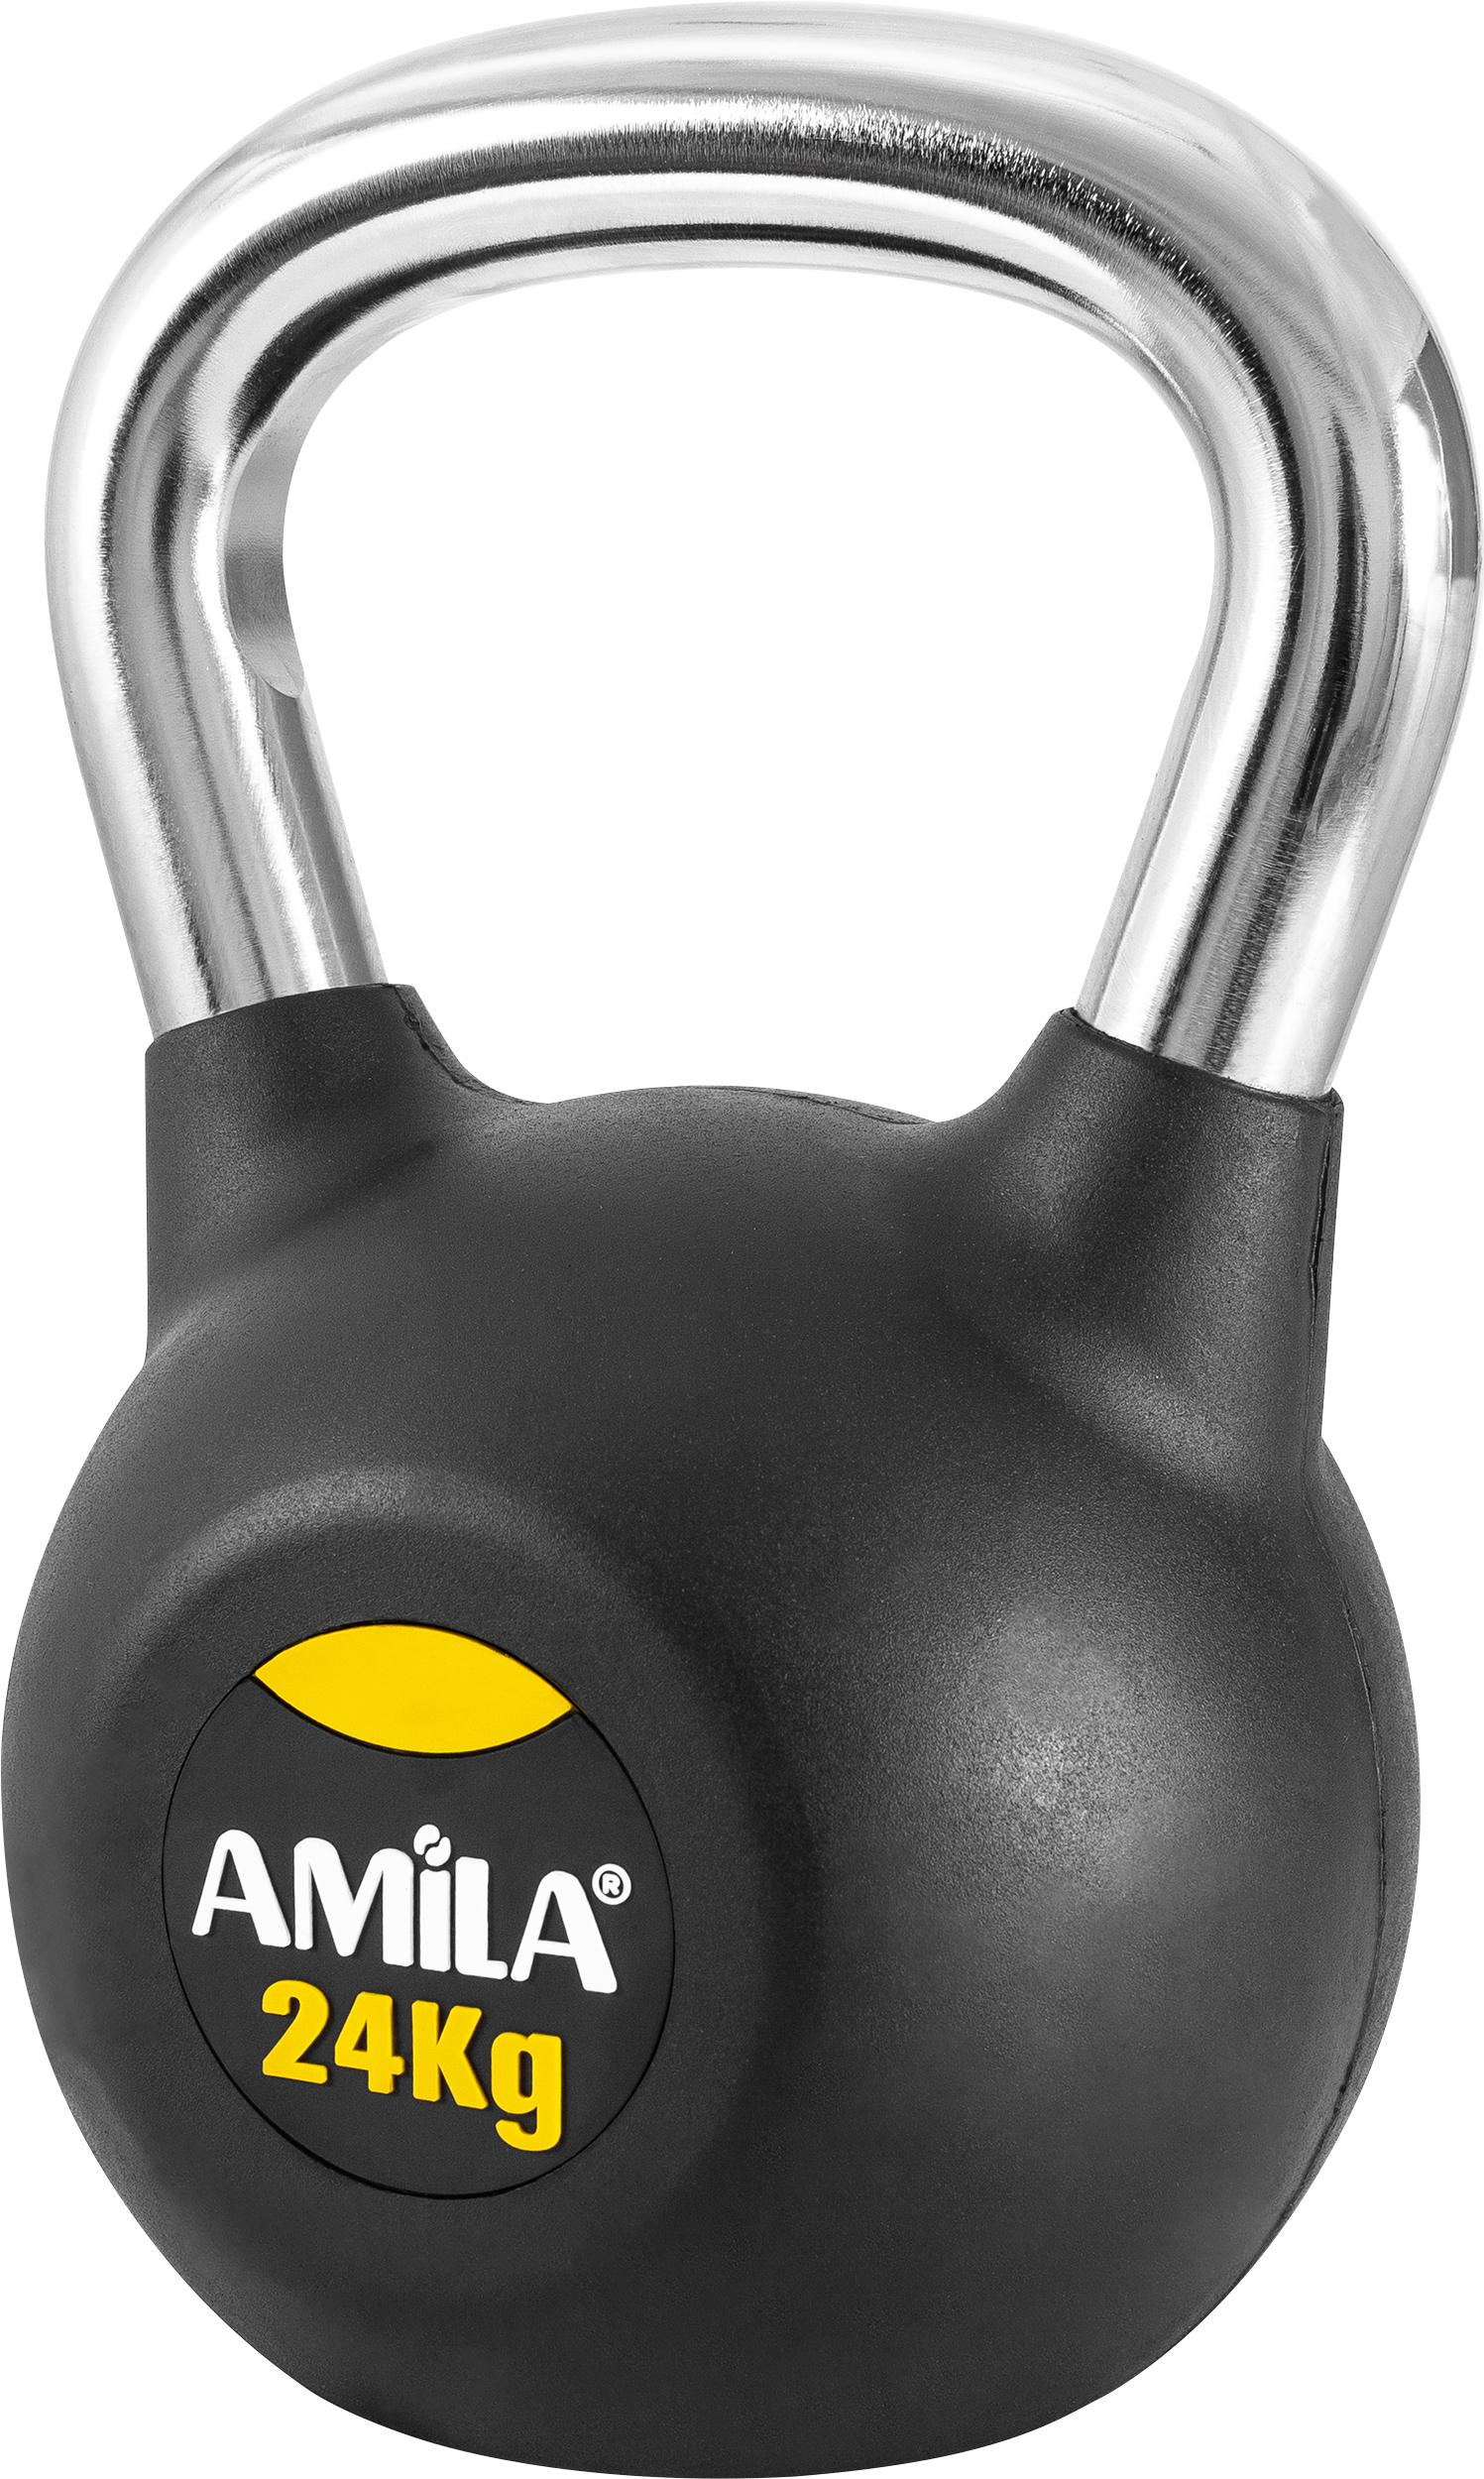 AMILA Kettlebell Rubber Cover Cr Handle 24kg